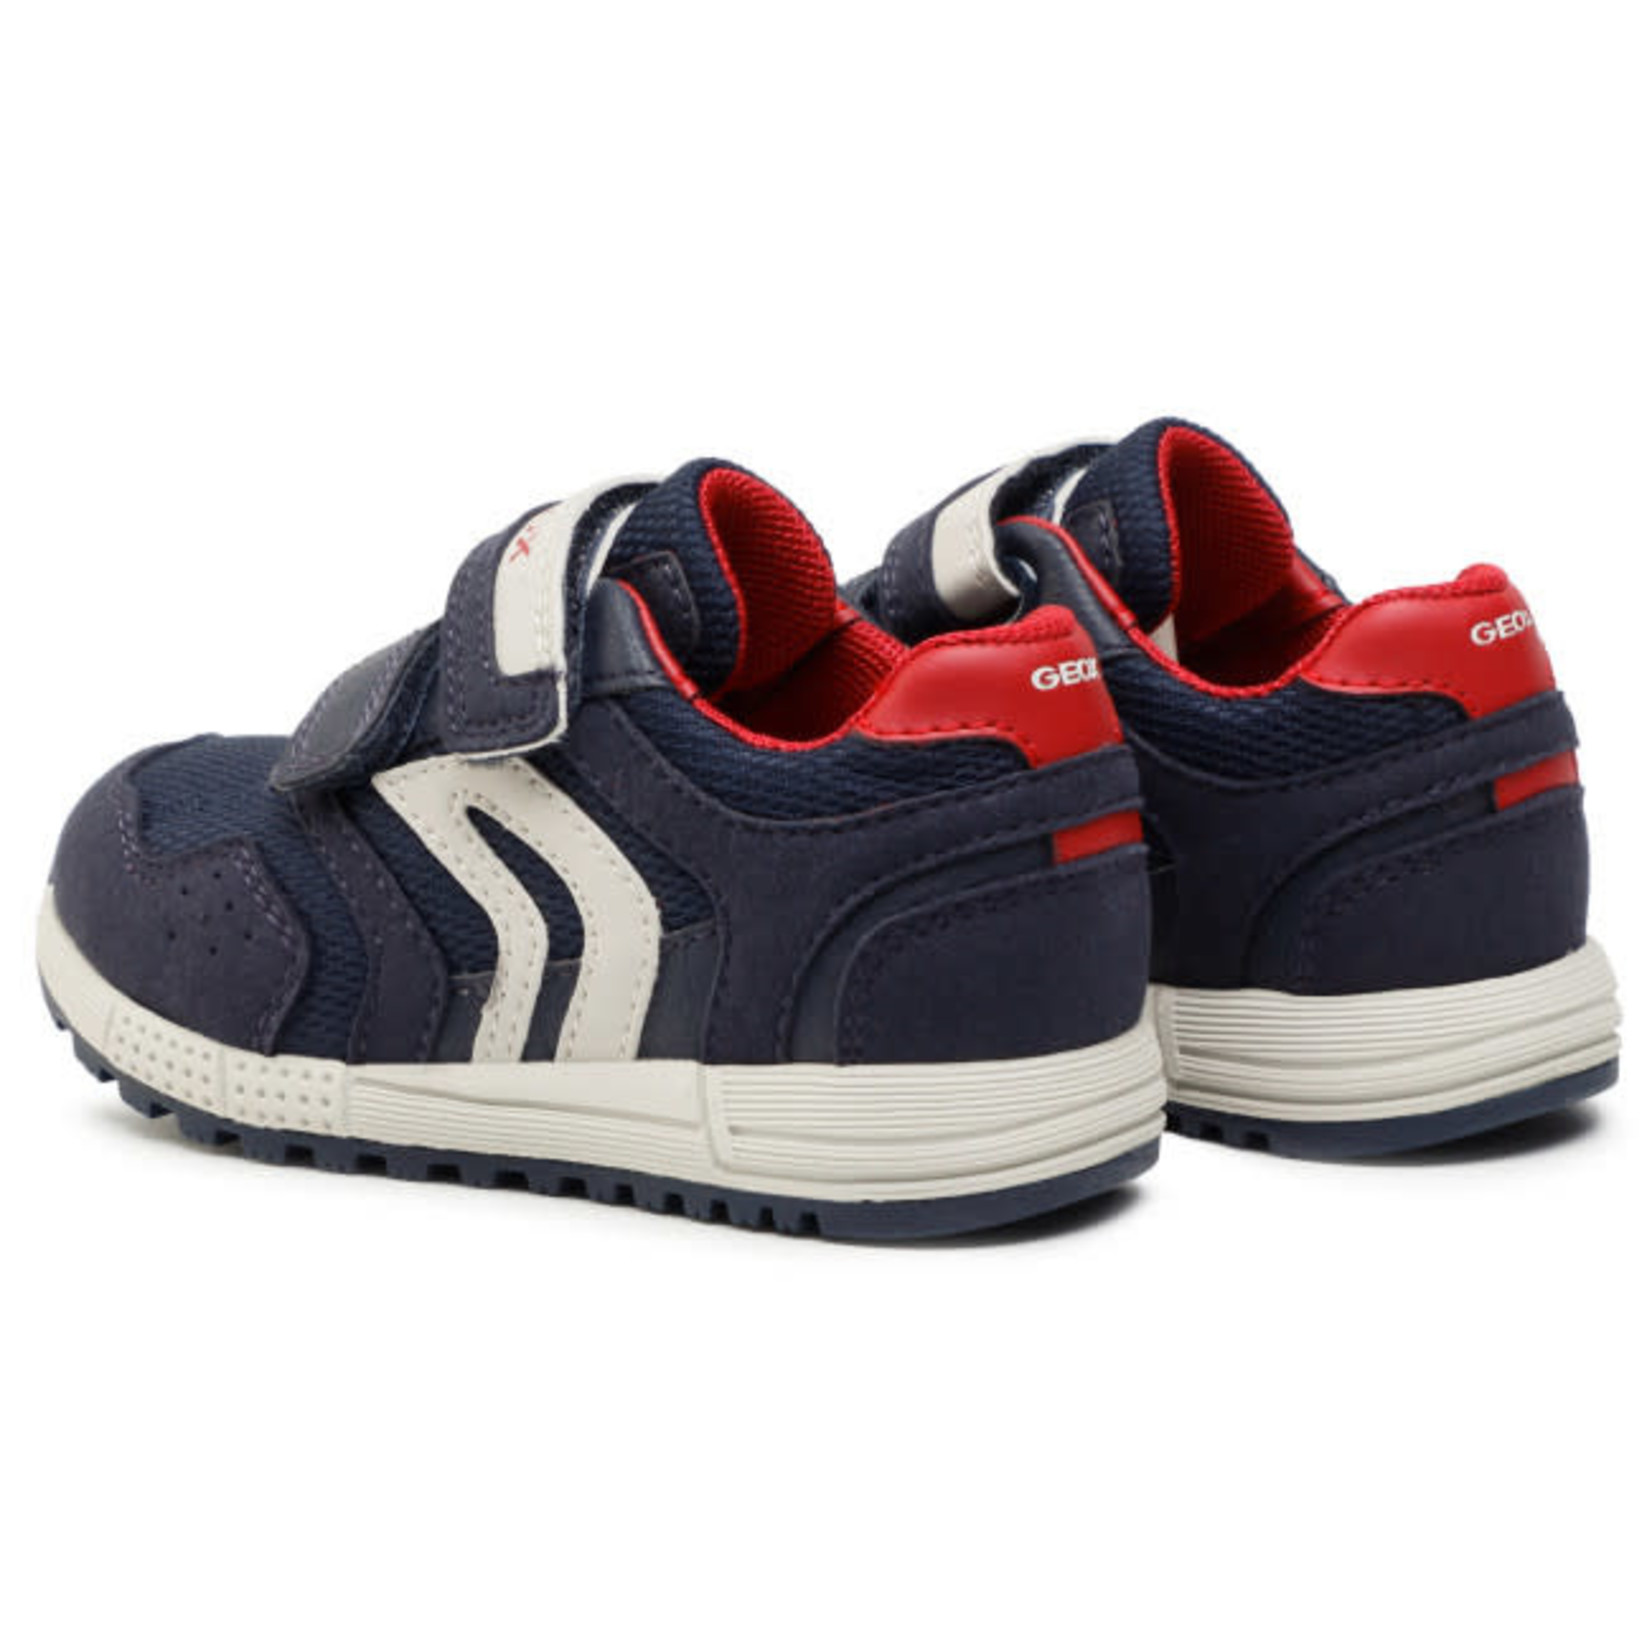 Geox GEOX - Chaussures de sport 'B. Alben - Textile et suede' - Navy/Red